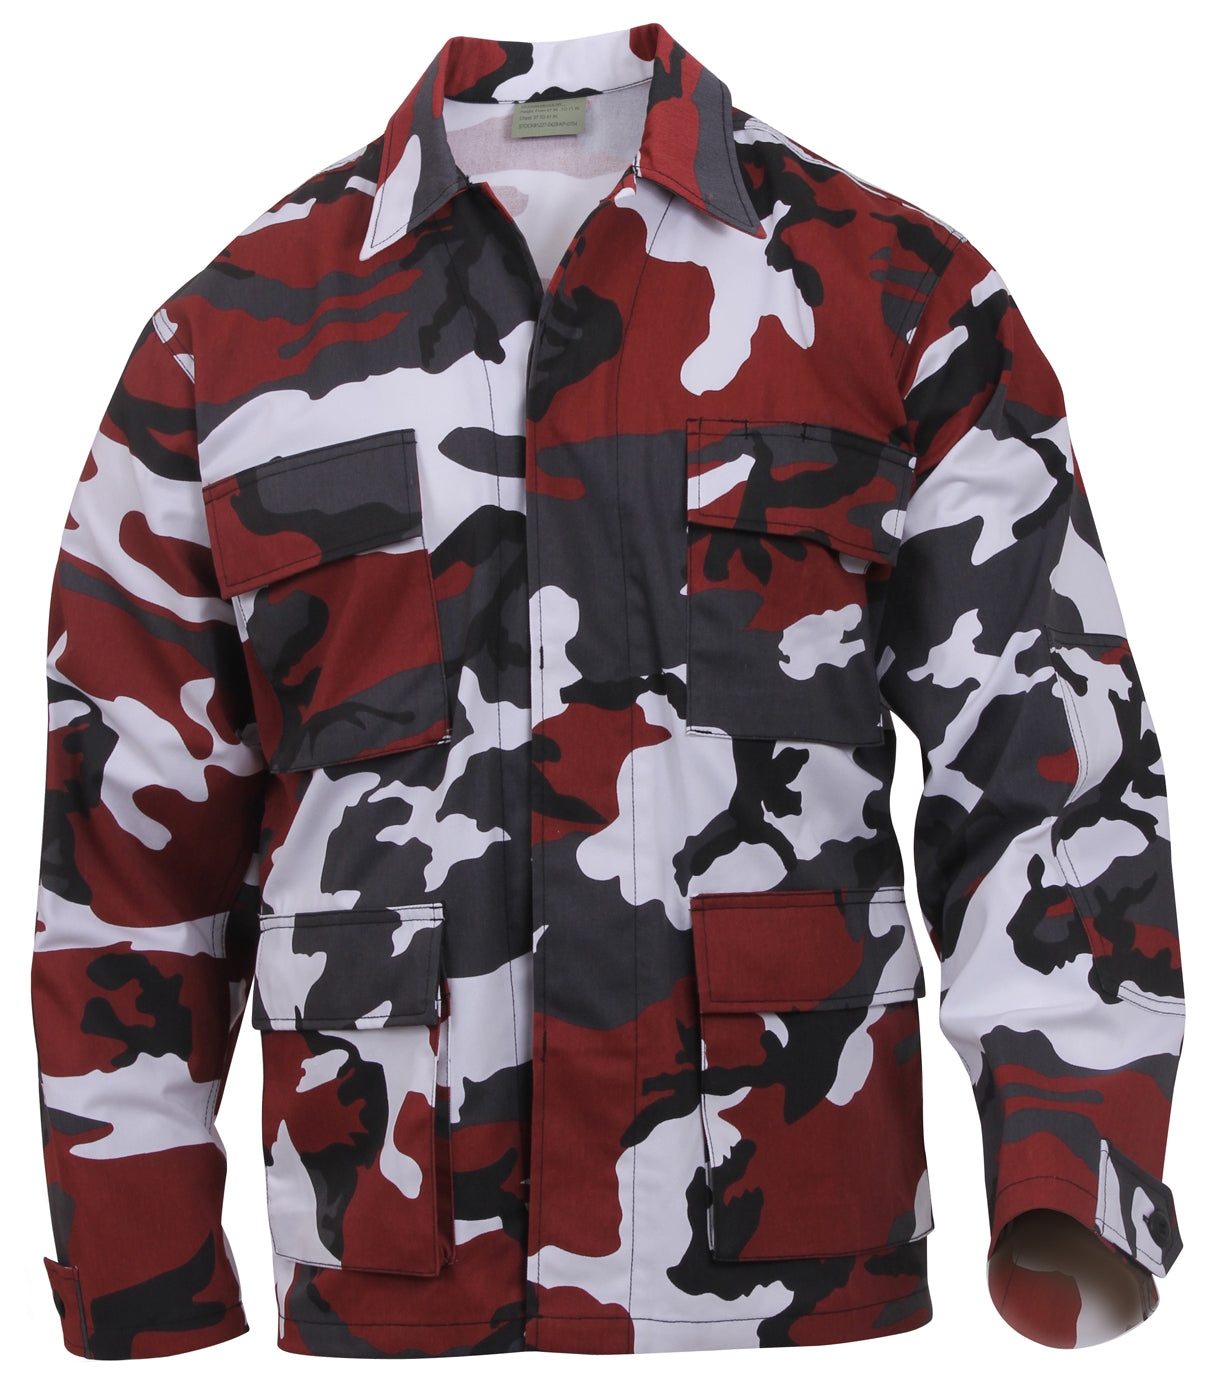 Milspec Color Camo BDU Shirt BDUs MilTac Tactical Military Outdoor Gear Australia